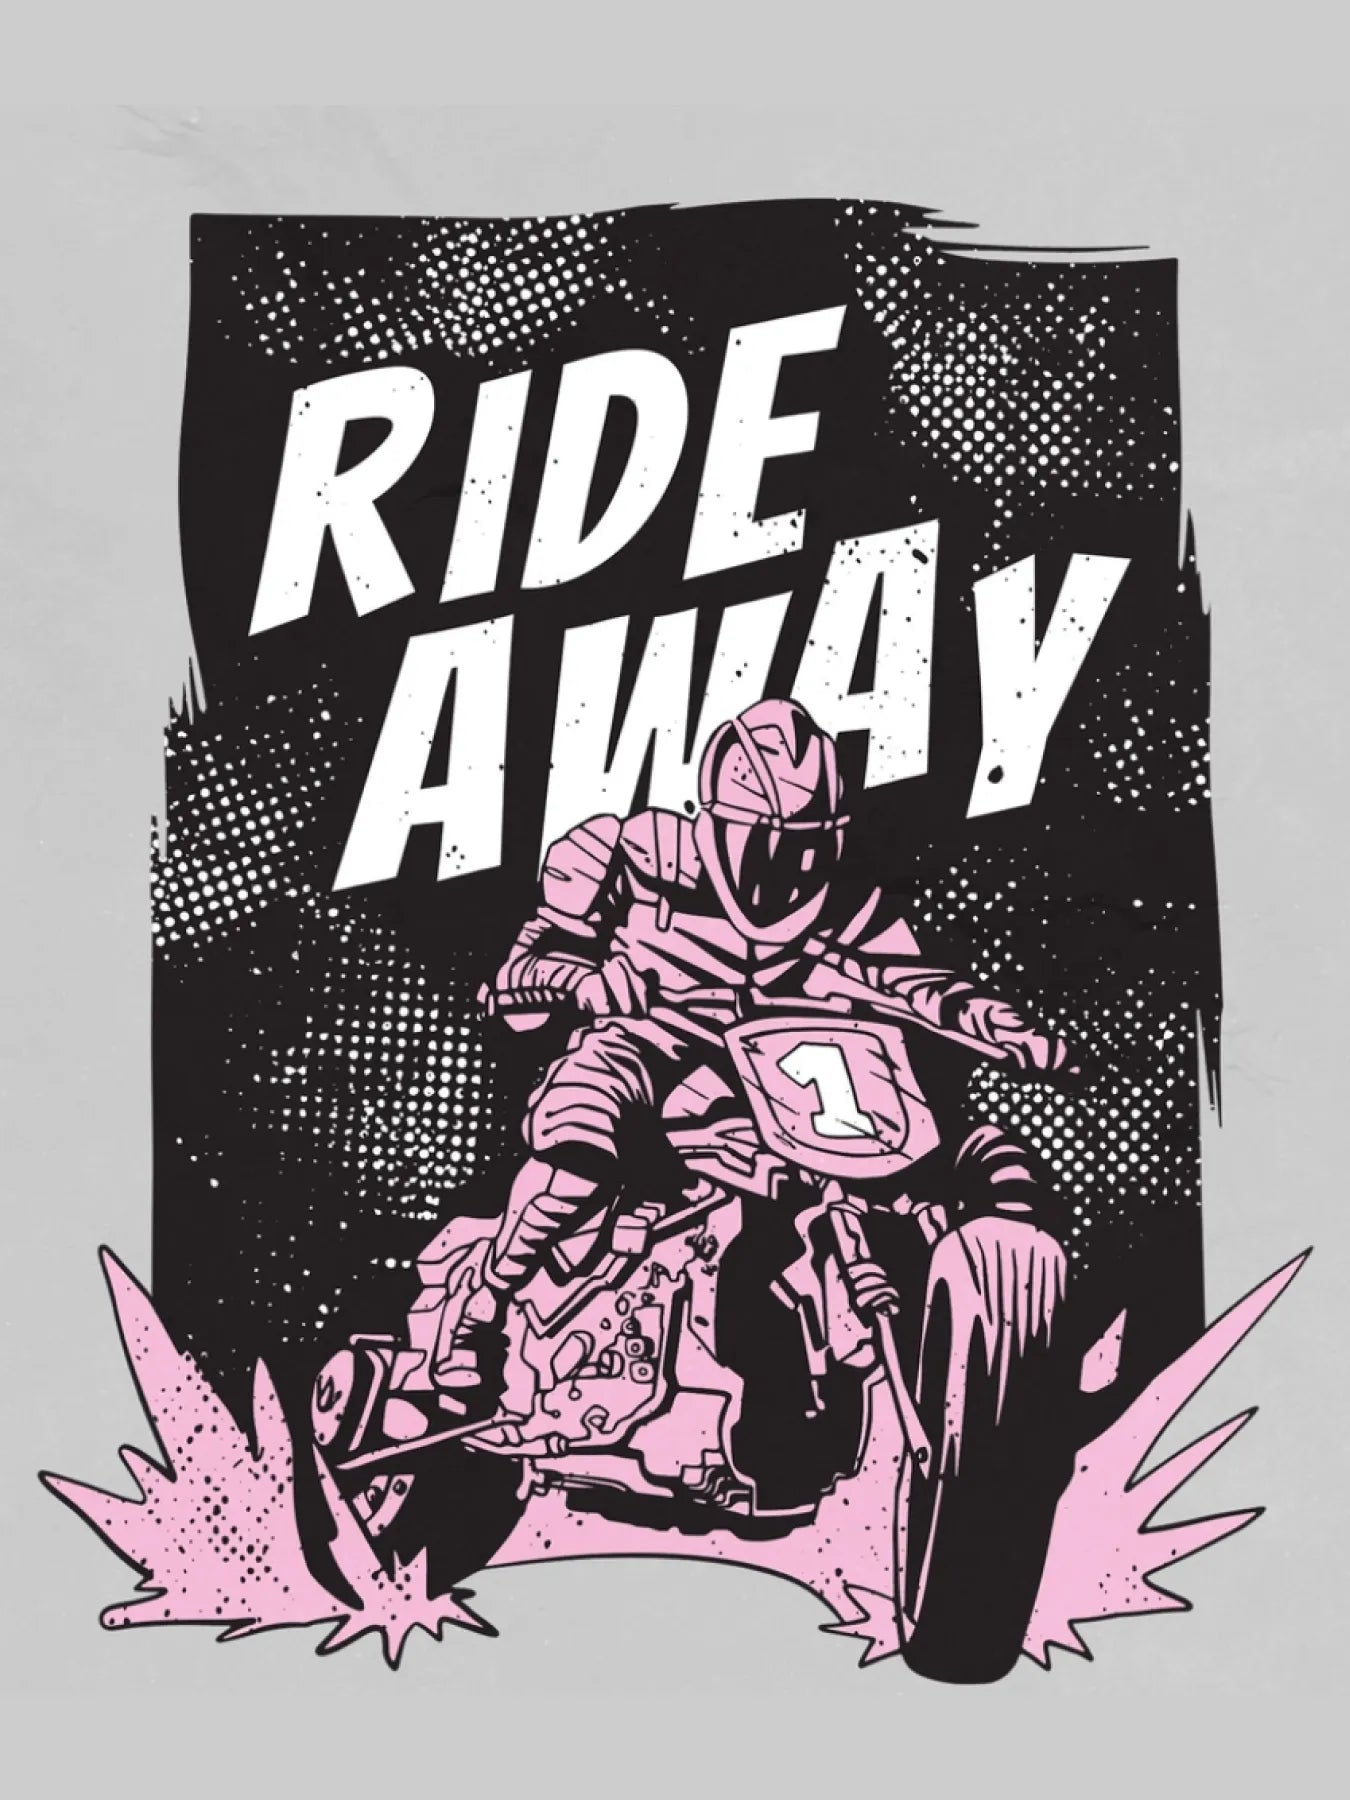 Ride away